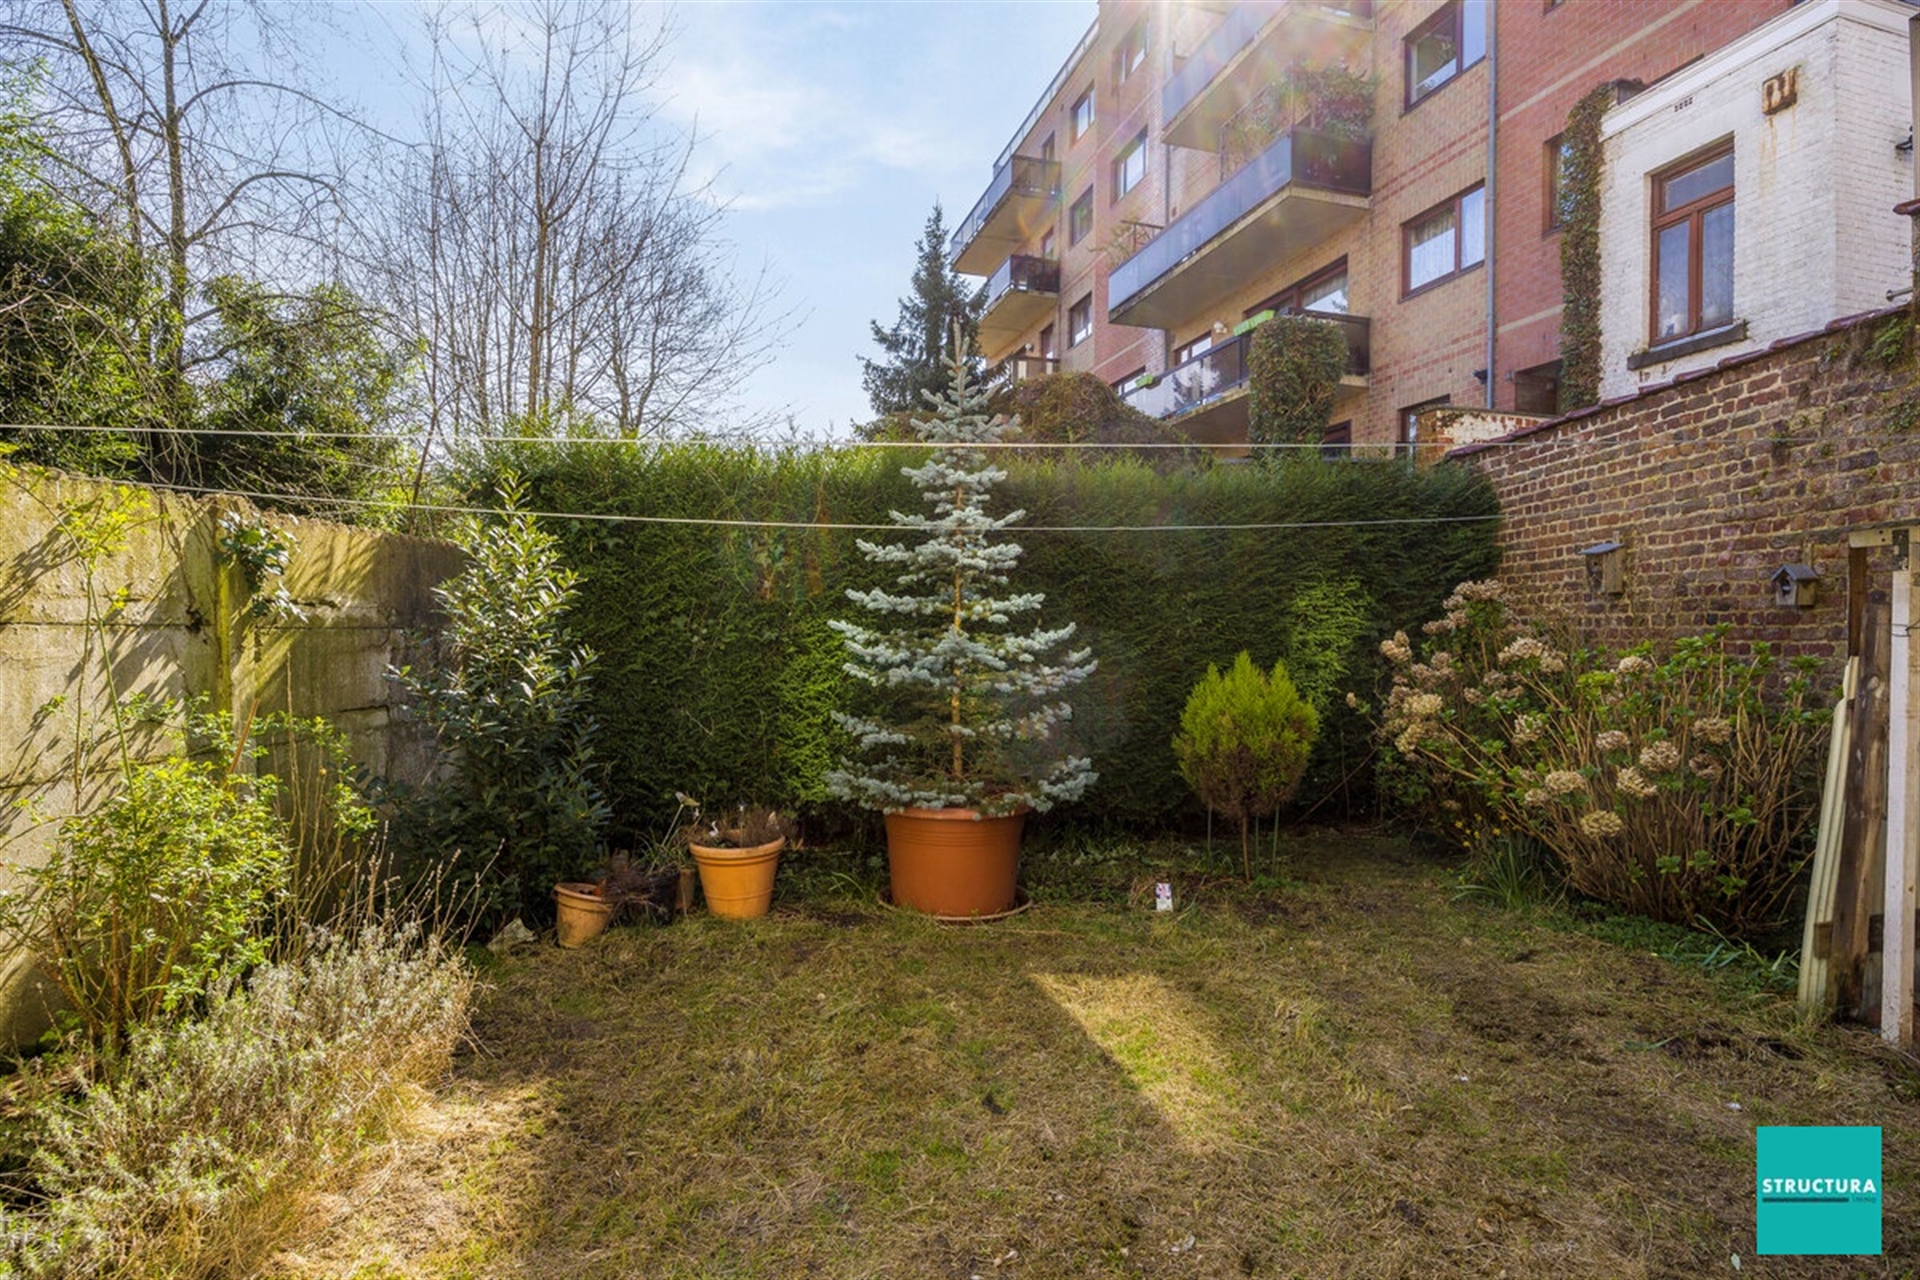 Gelijkvloers appartement met tuin te koop in SINT-AGATHA-BERCHEM


. foto 14